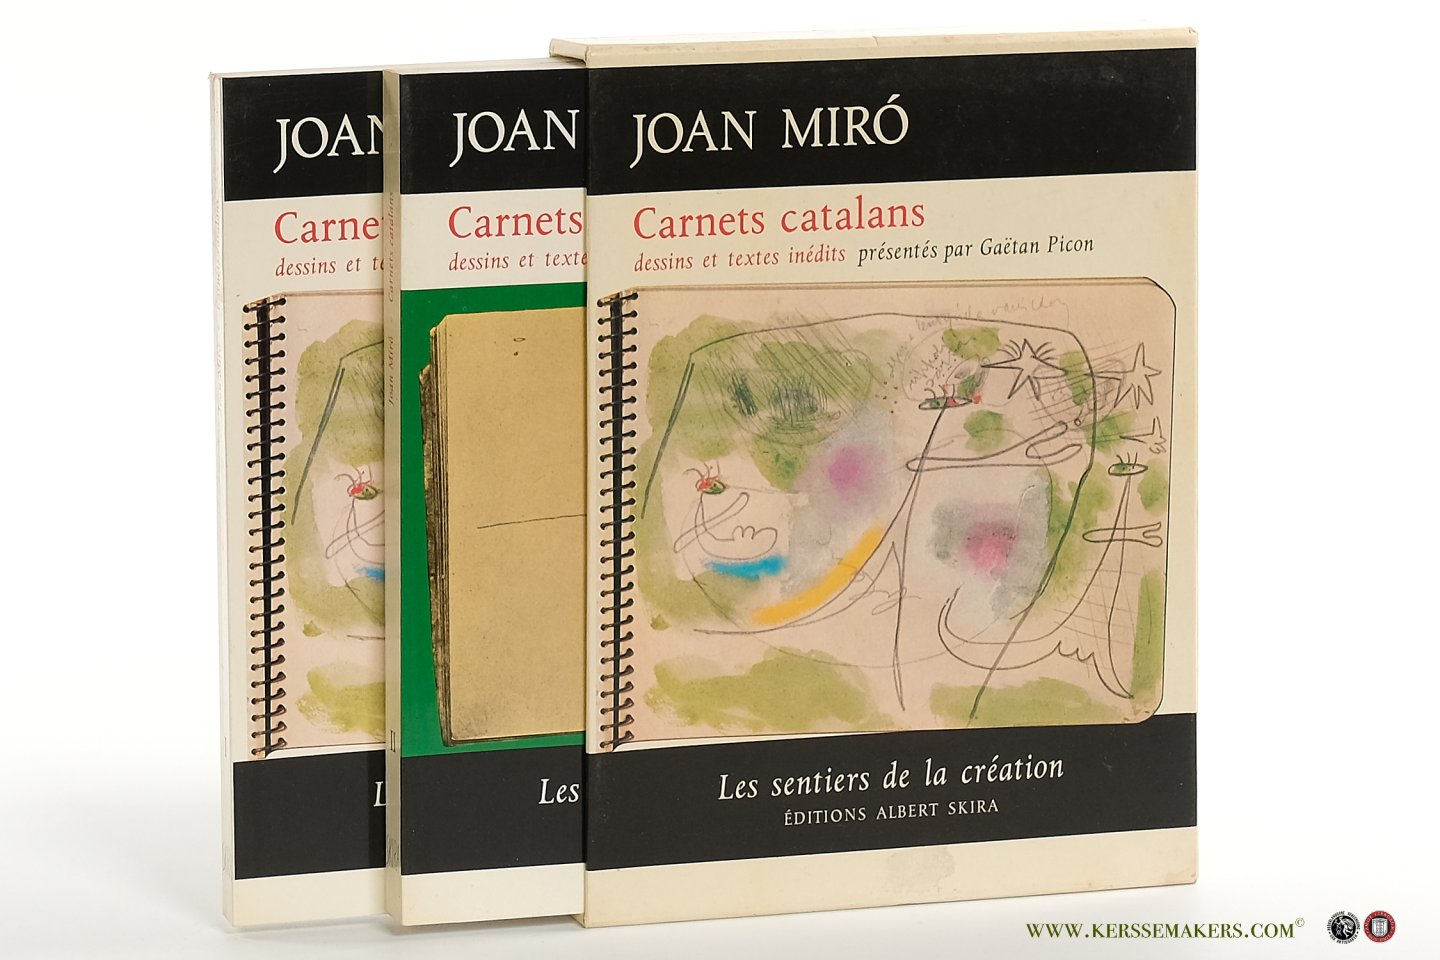 Picon, Gaëtan - Joan Miro, Carnets Catalans présentés par Gaëtan Picon.